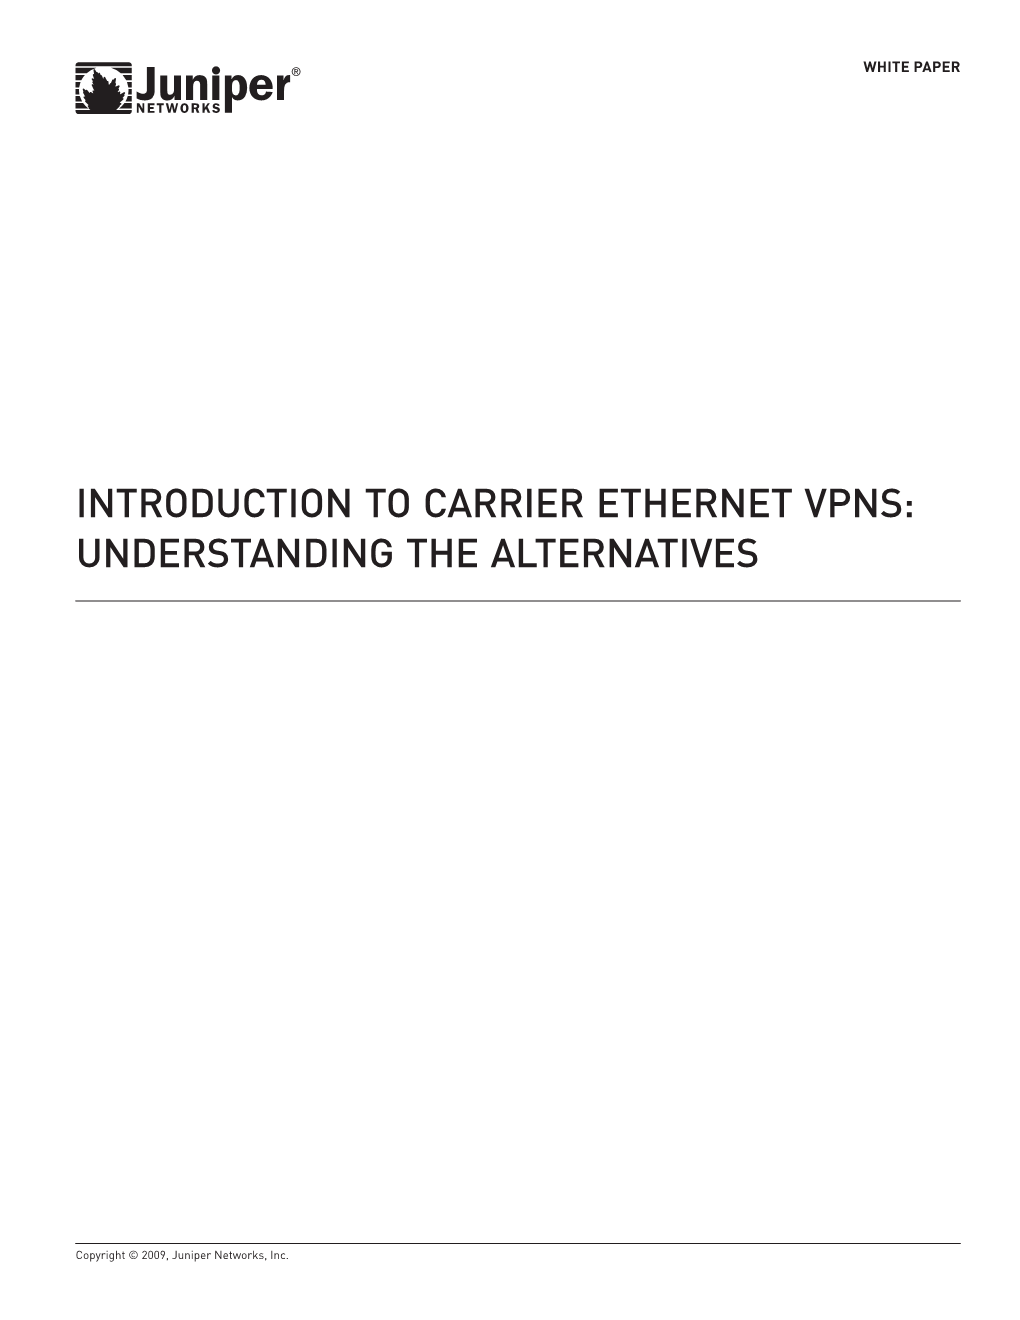 Introduction to Carrier Ethernet Vpns: Understanding the Alternatives